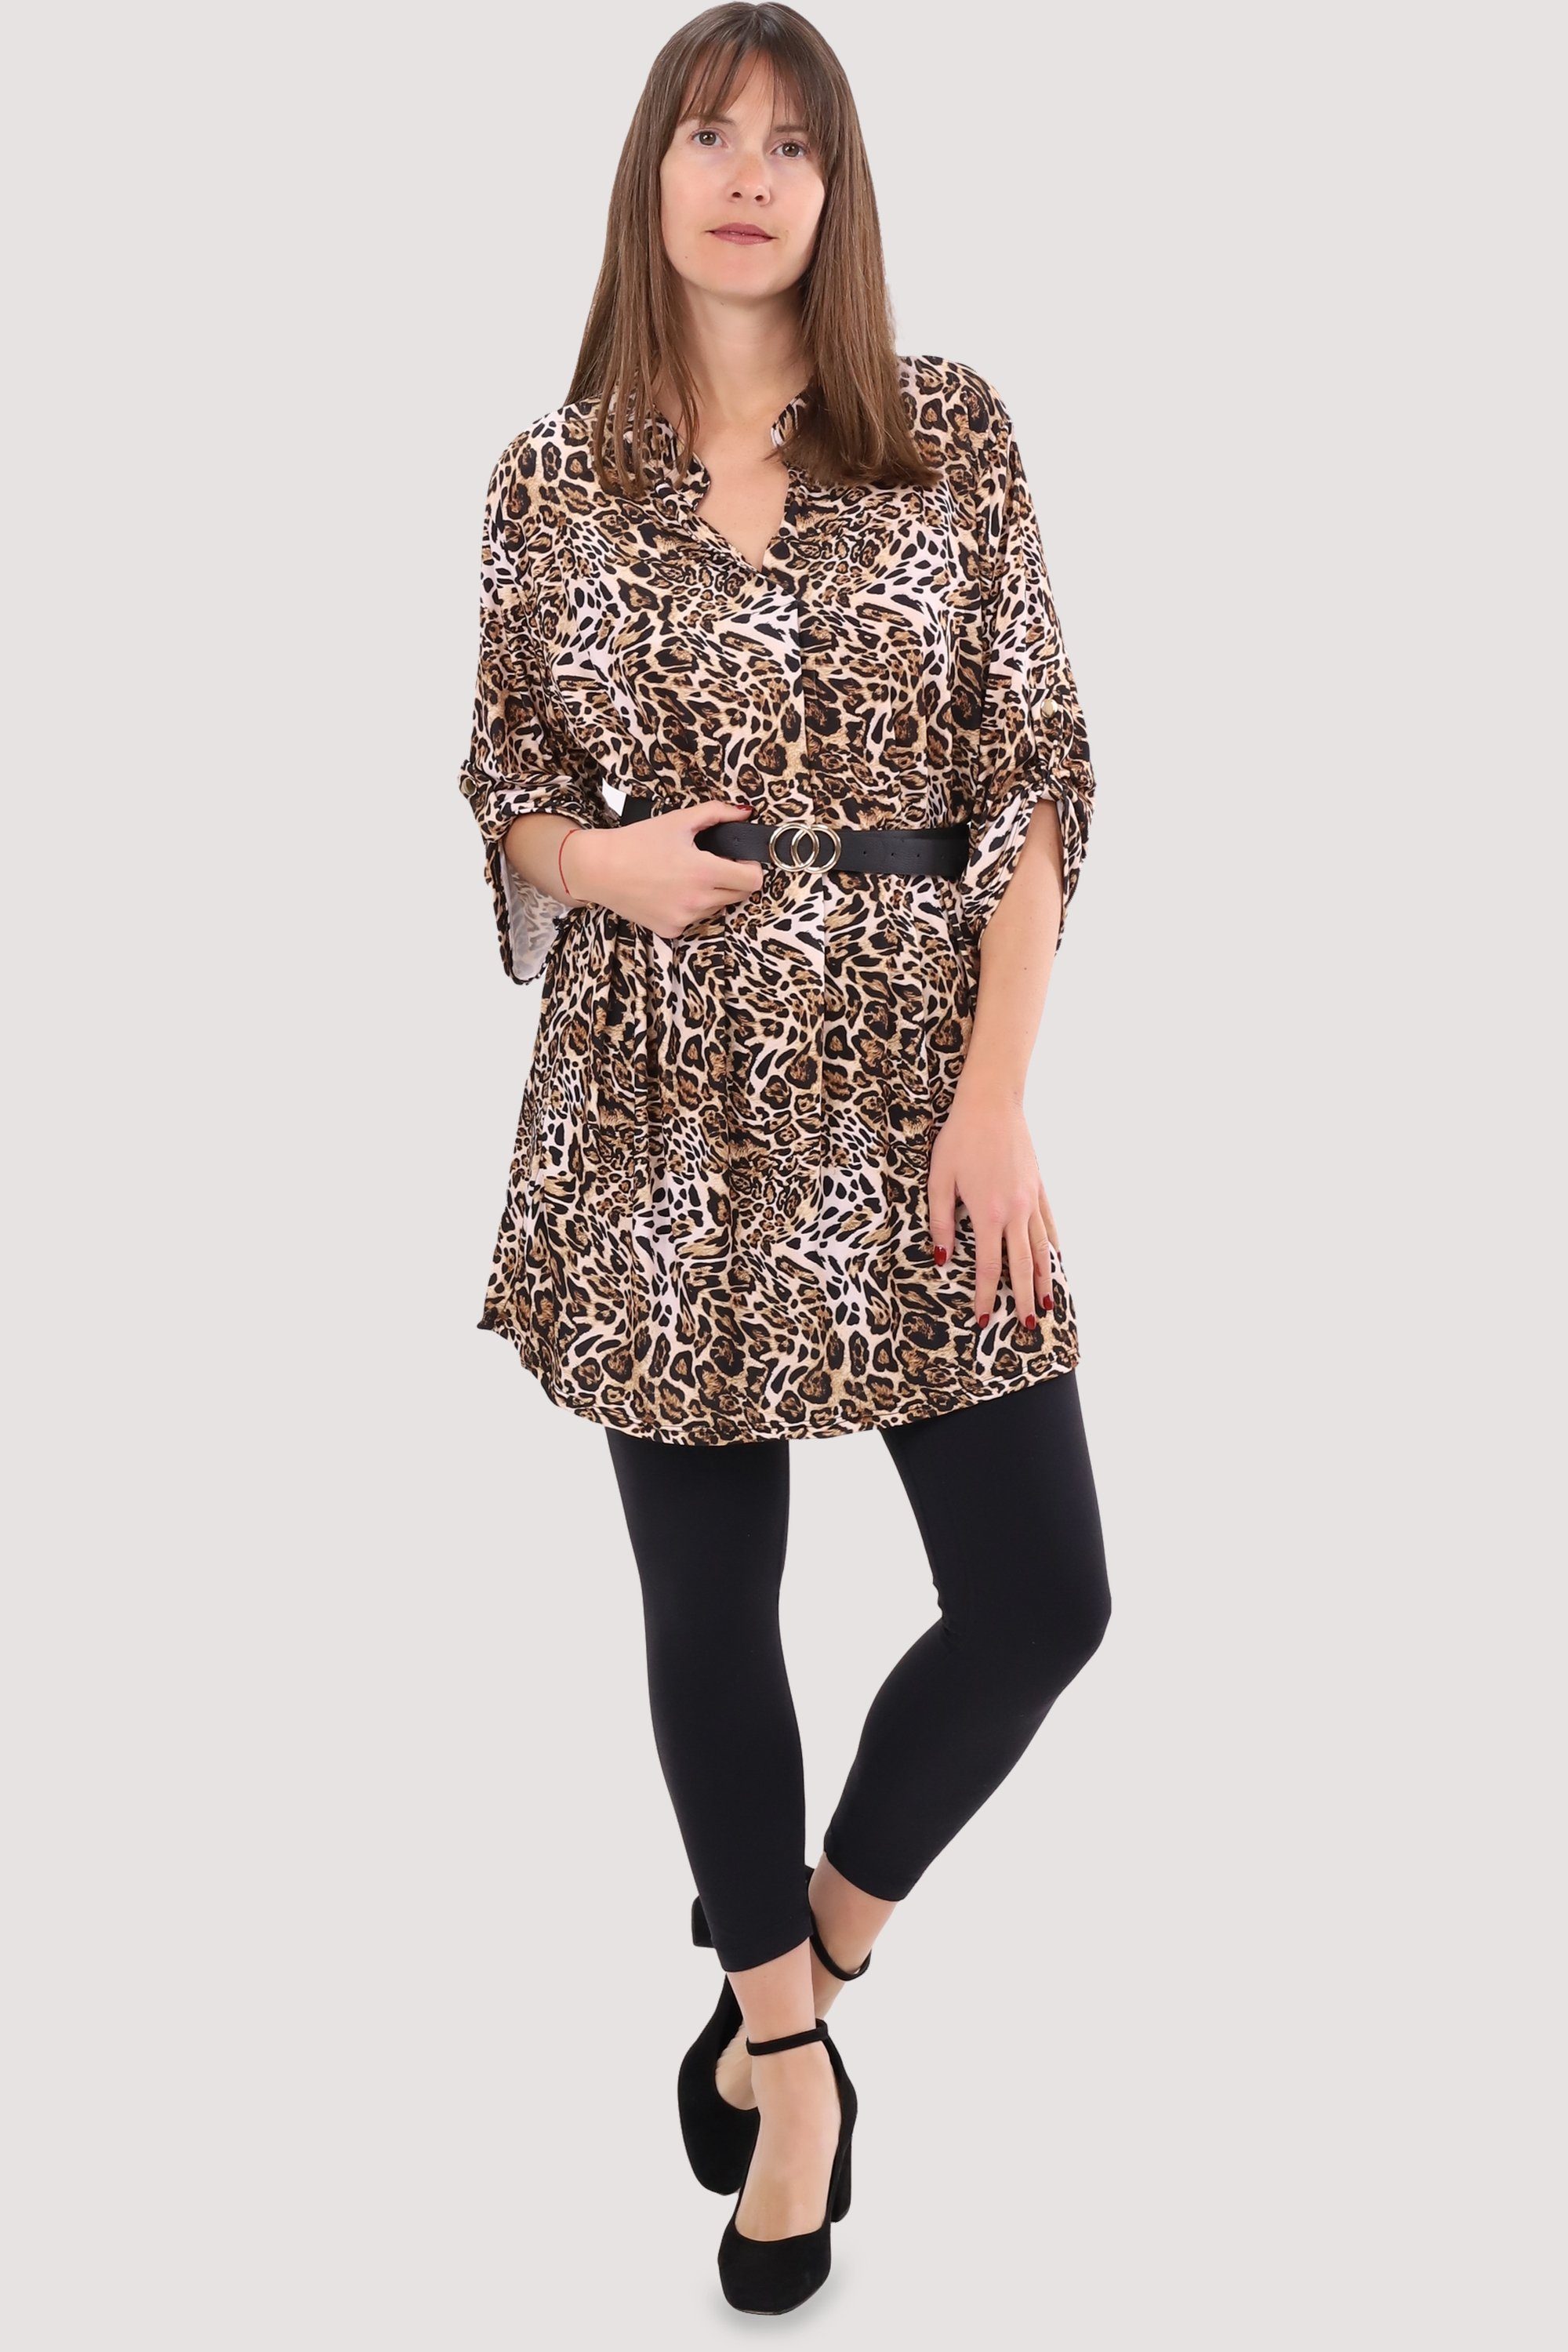 Gürtel malito than more Tunika 23203 Animalprint fashion Bluse Einheitsgröße Jaguar Kleid mit 2 Druckkleid